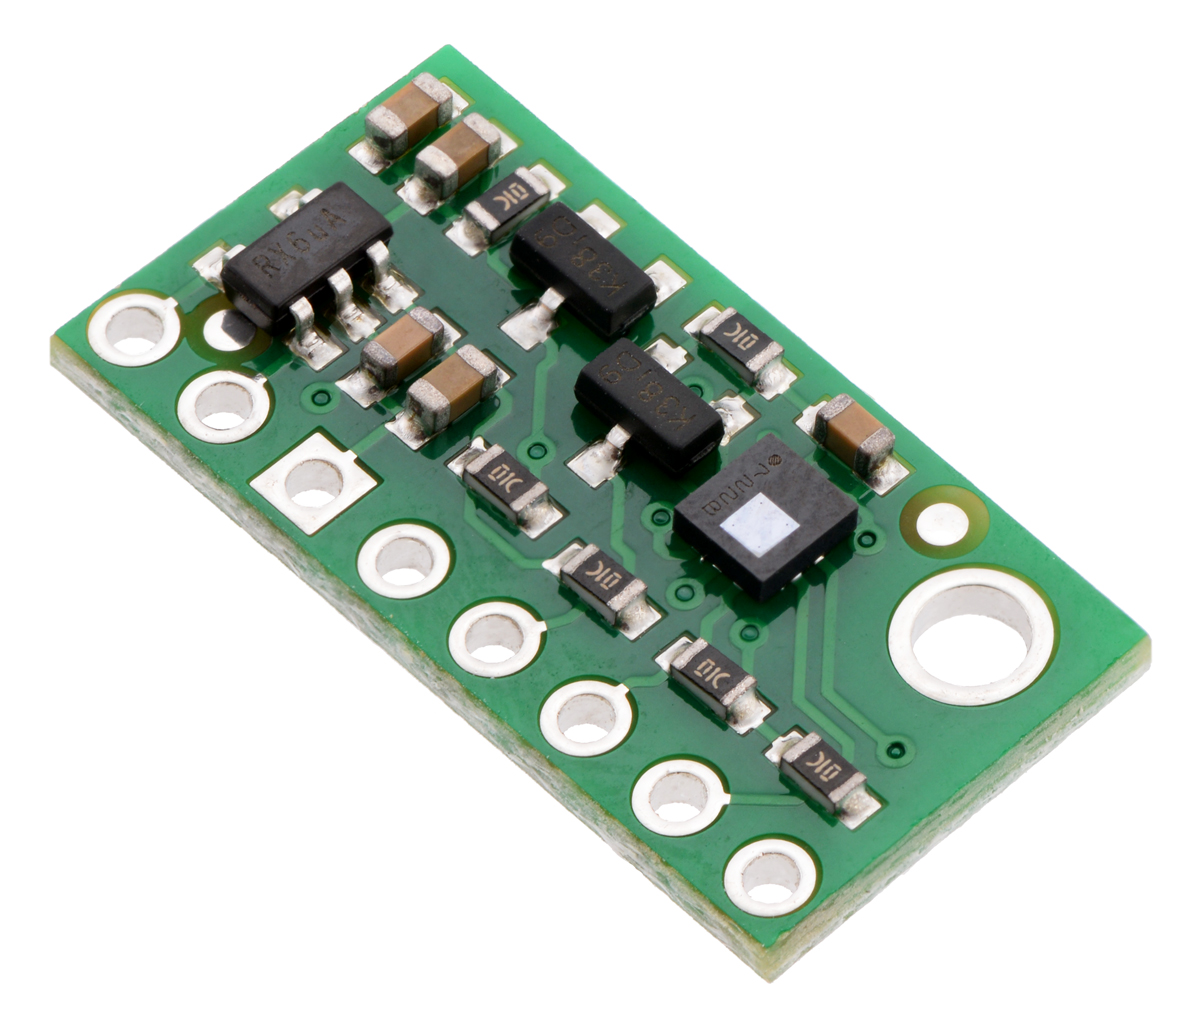 LPS22HB Atmospheric Pressure Sensor Module Pressure Resistance SPI for Arduino 